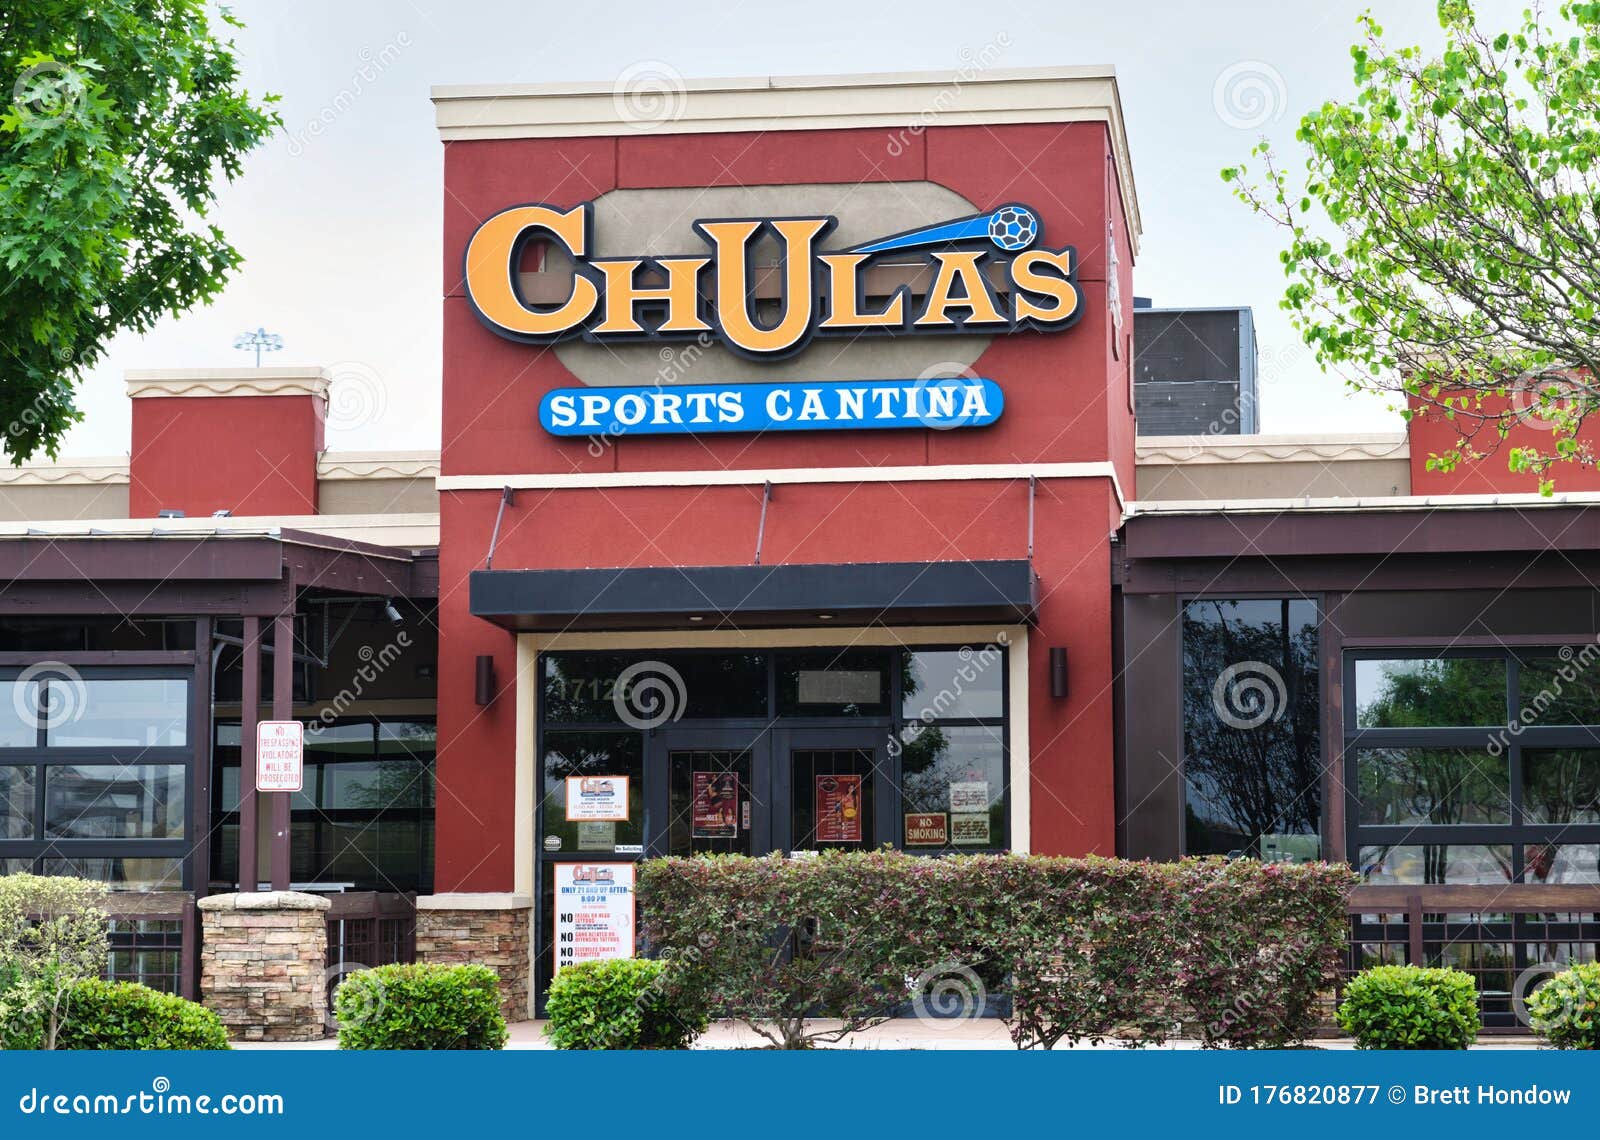 Chulas Sports Cantina Exterior at Willowbrook in Houston, TX. Editorial